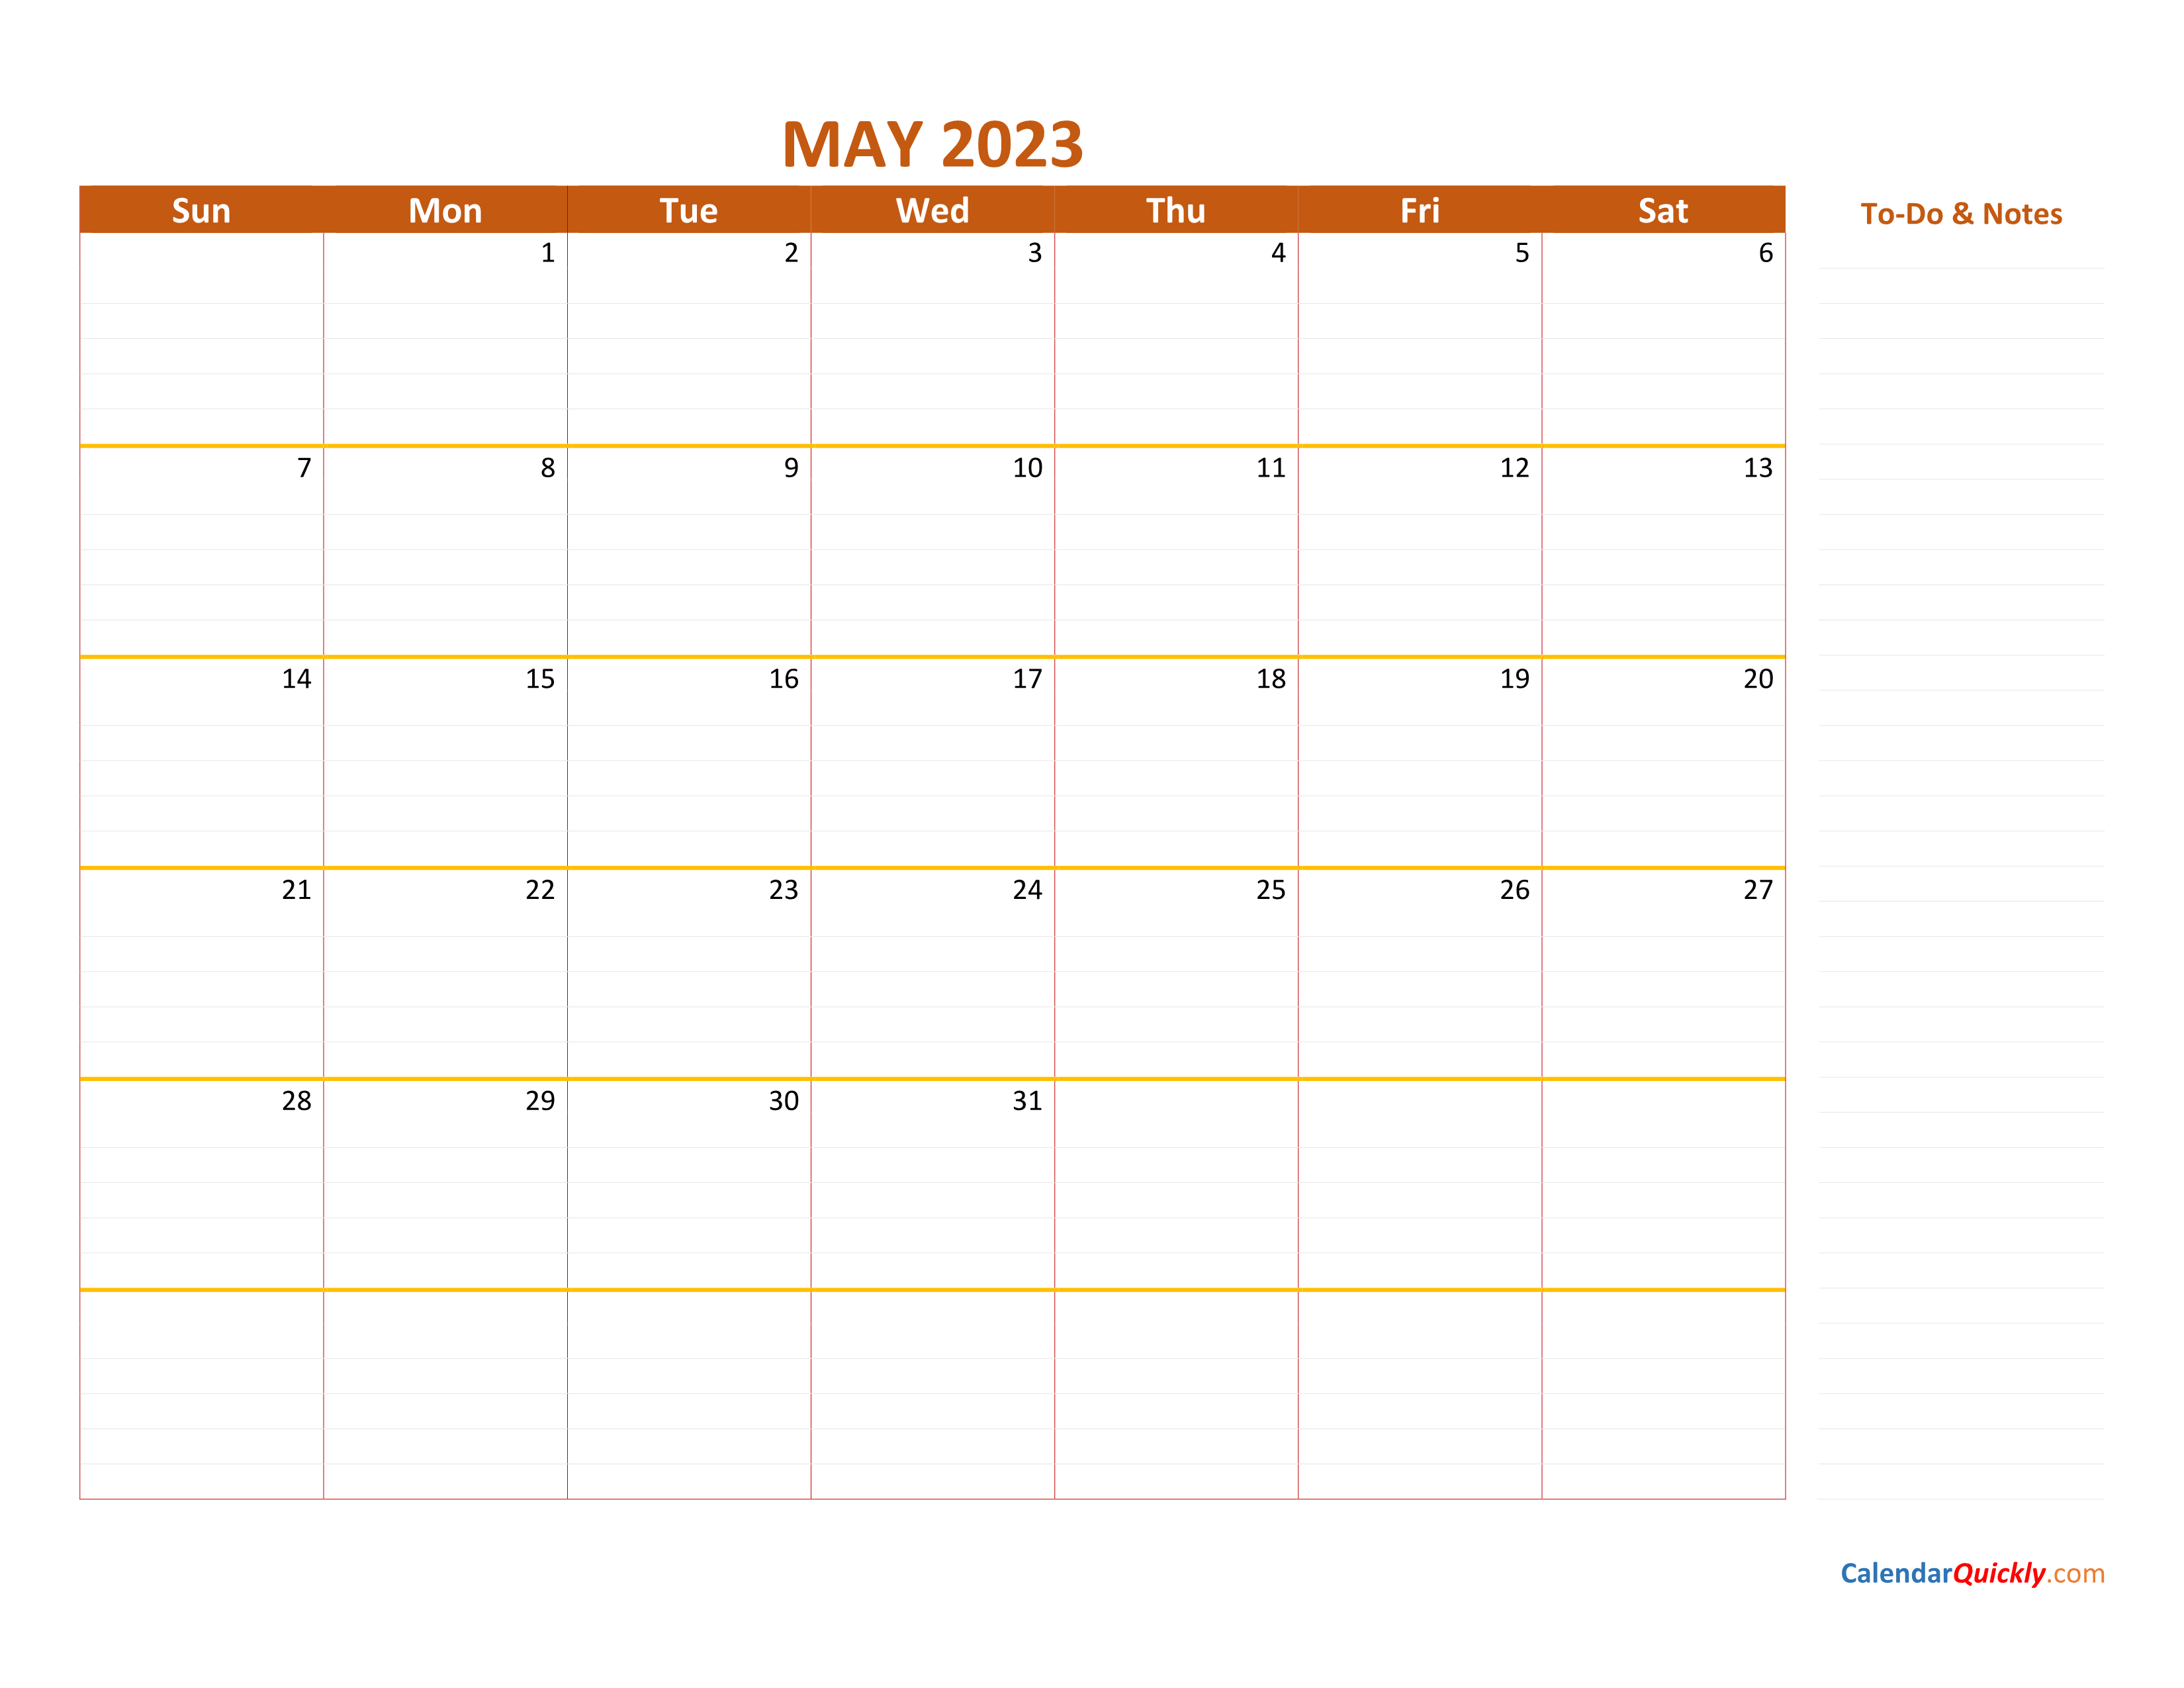 May 2023 Calendar | Calendar Quickly